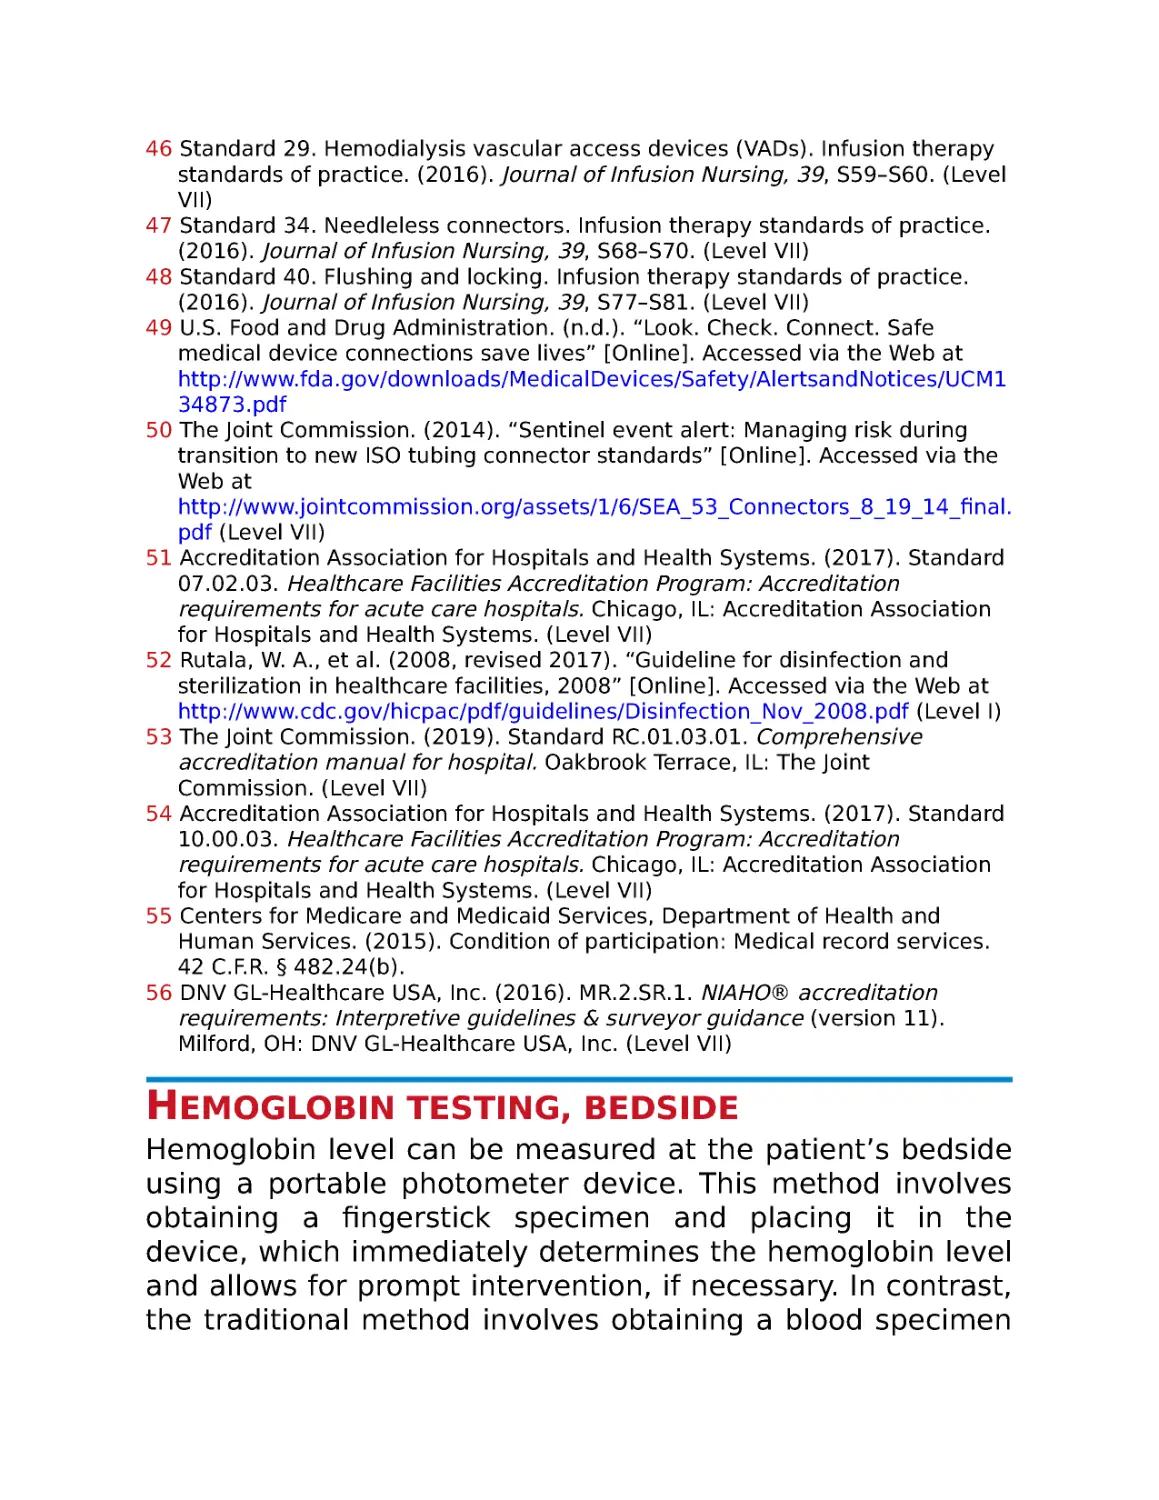 Hemoglobin testing, bedside